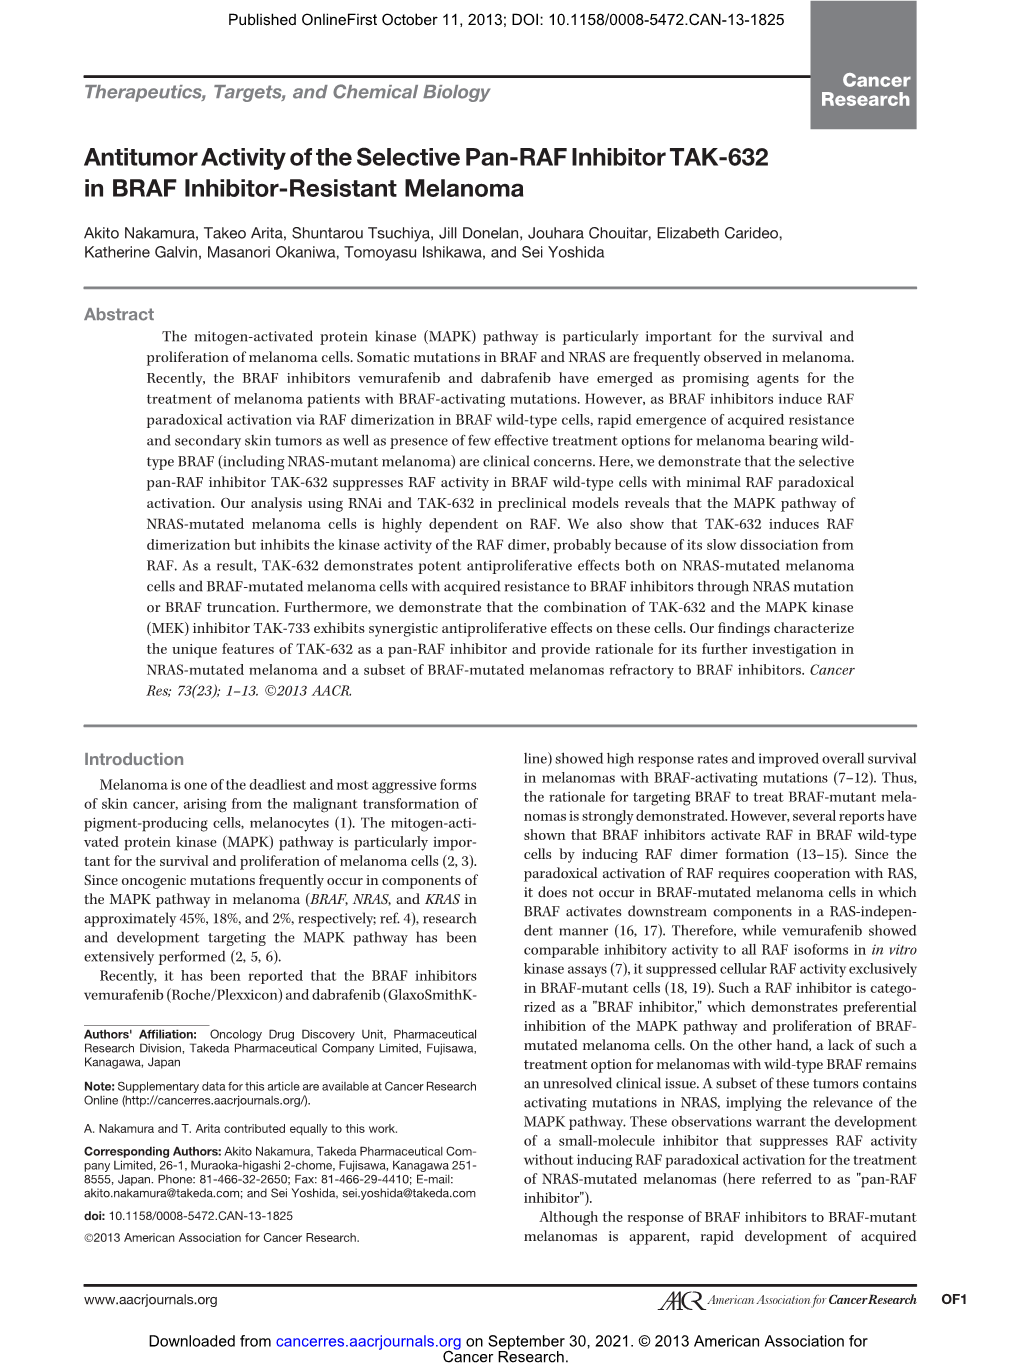 Antitumor Activity of the Selective Pan-RAF Inhibitor TAK-632 in BRAF Inhibitor-Resistant Melanoma